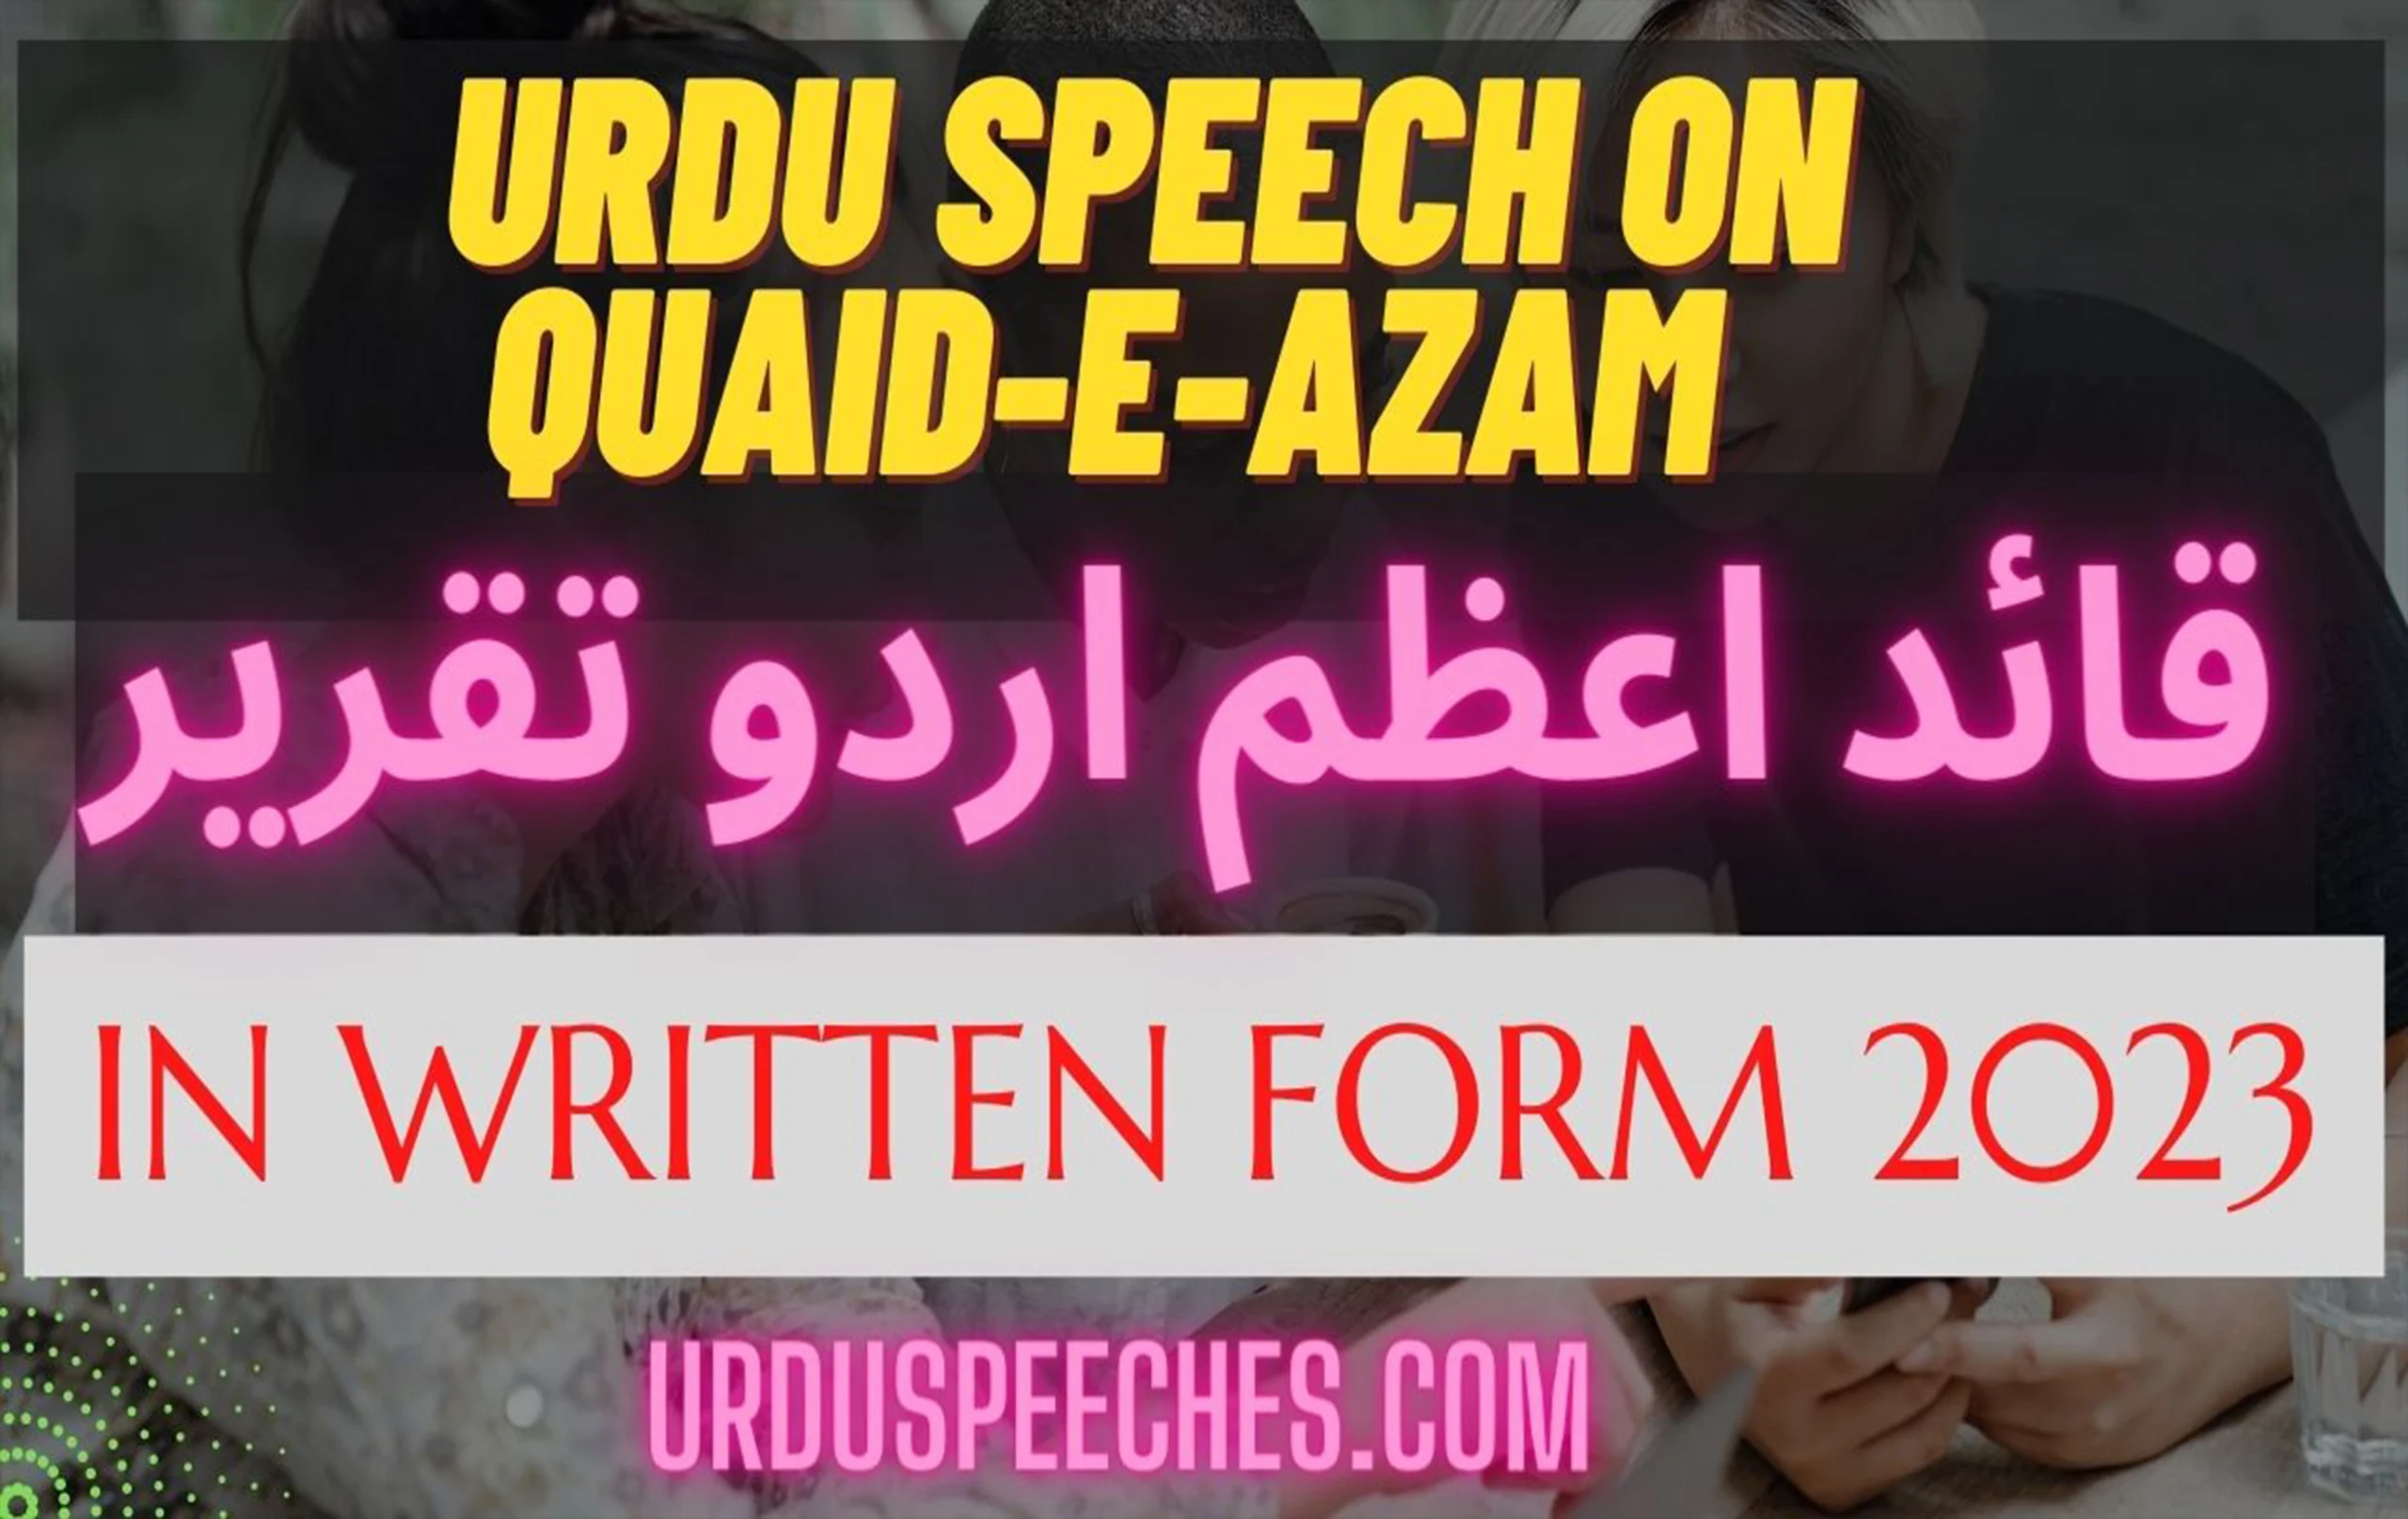 URDU QUAID E AZAM SPEECH IN WRITTEN FORM